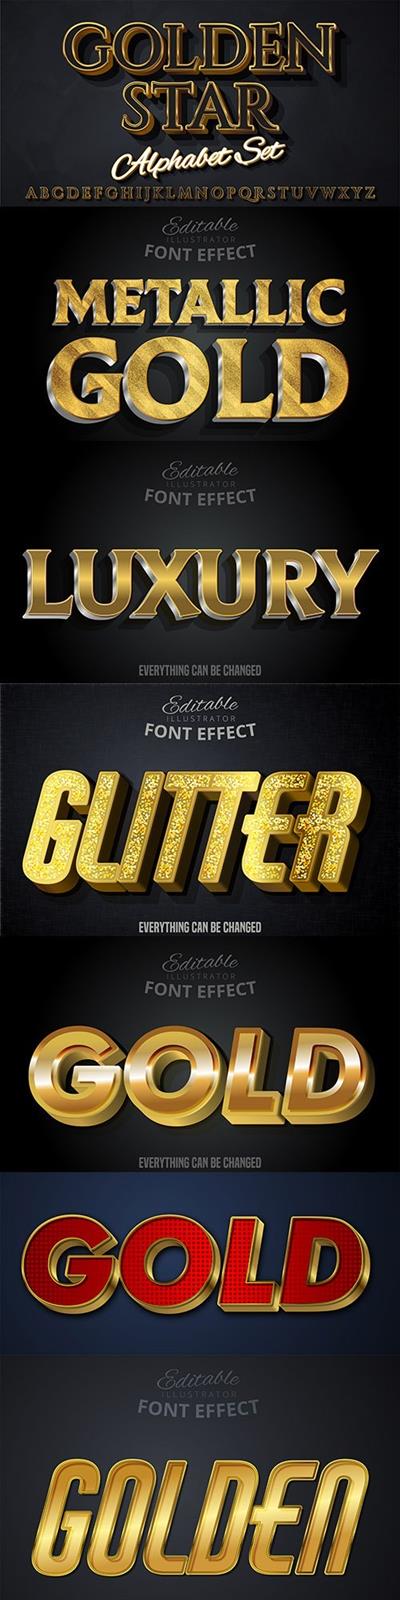 Gold text effect illustration edited font